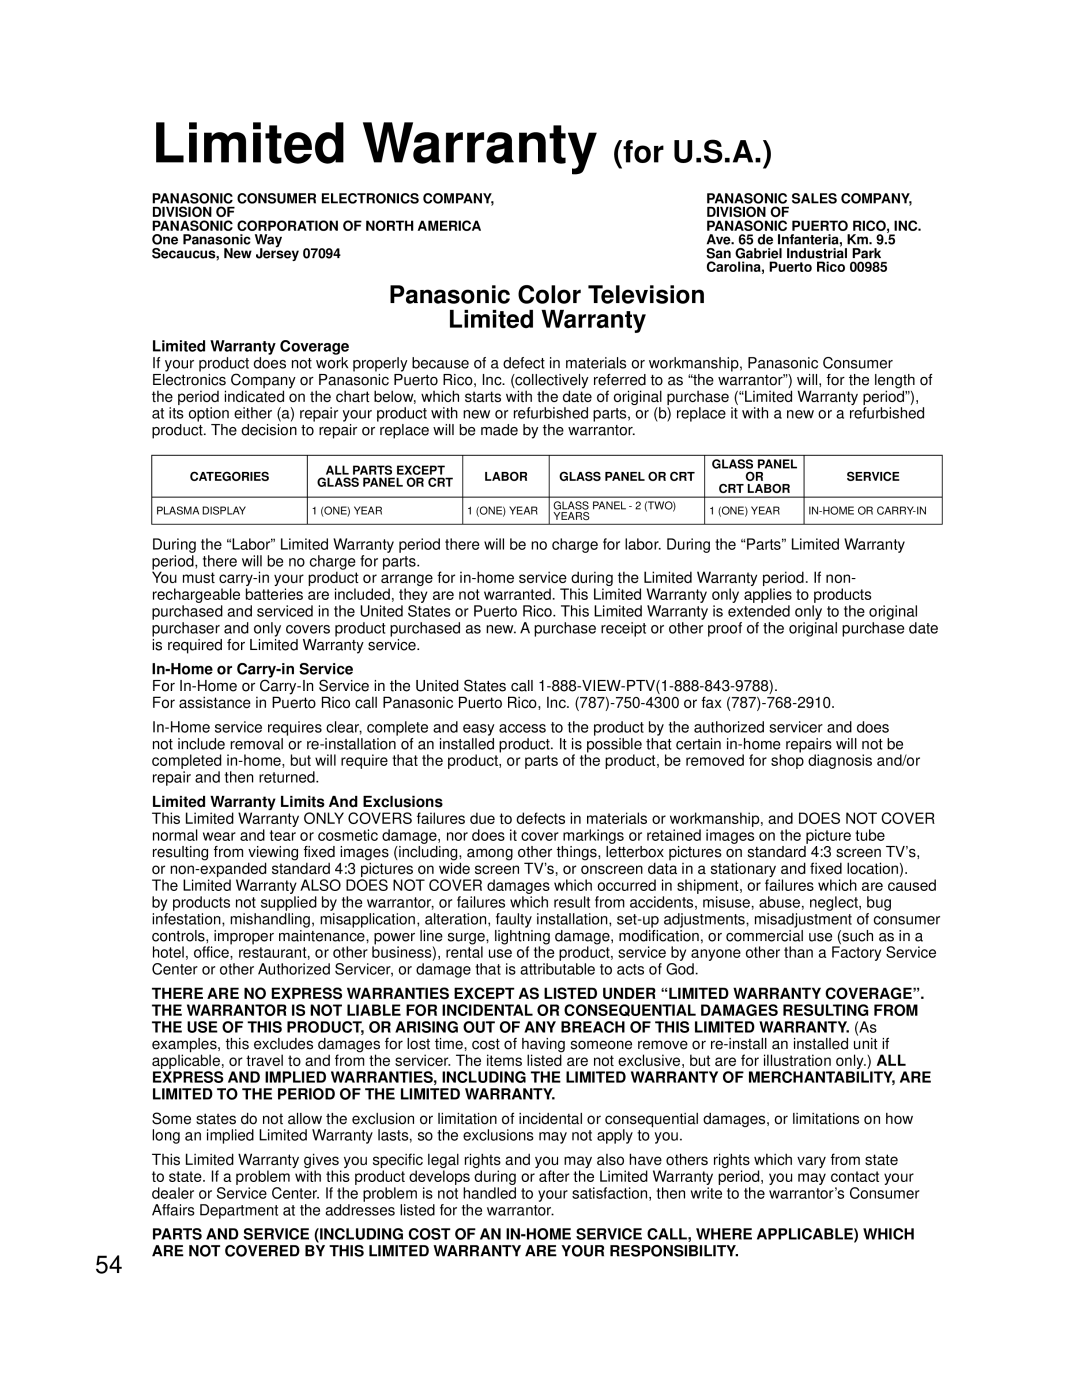 Panasonic TQB2AA0756 Limited Warranty for U.S.A, Panasonic Color Television Limited Warranty, Limited Warranty Coverage 